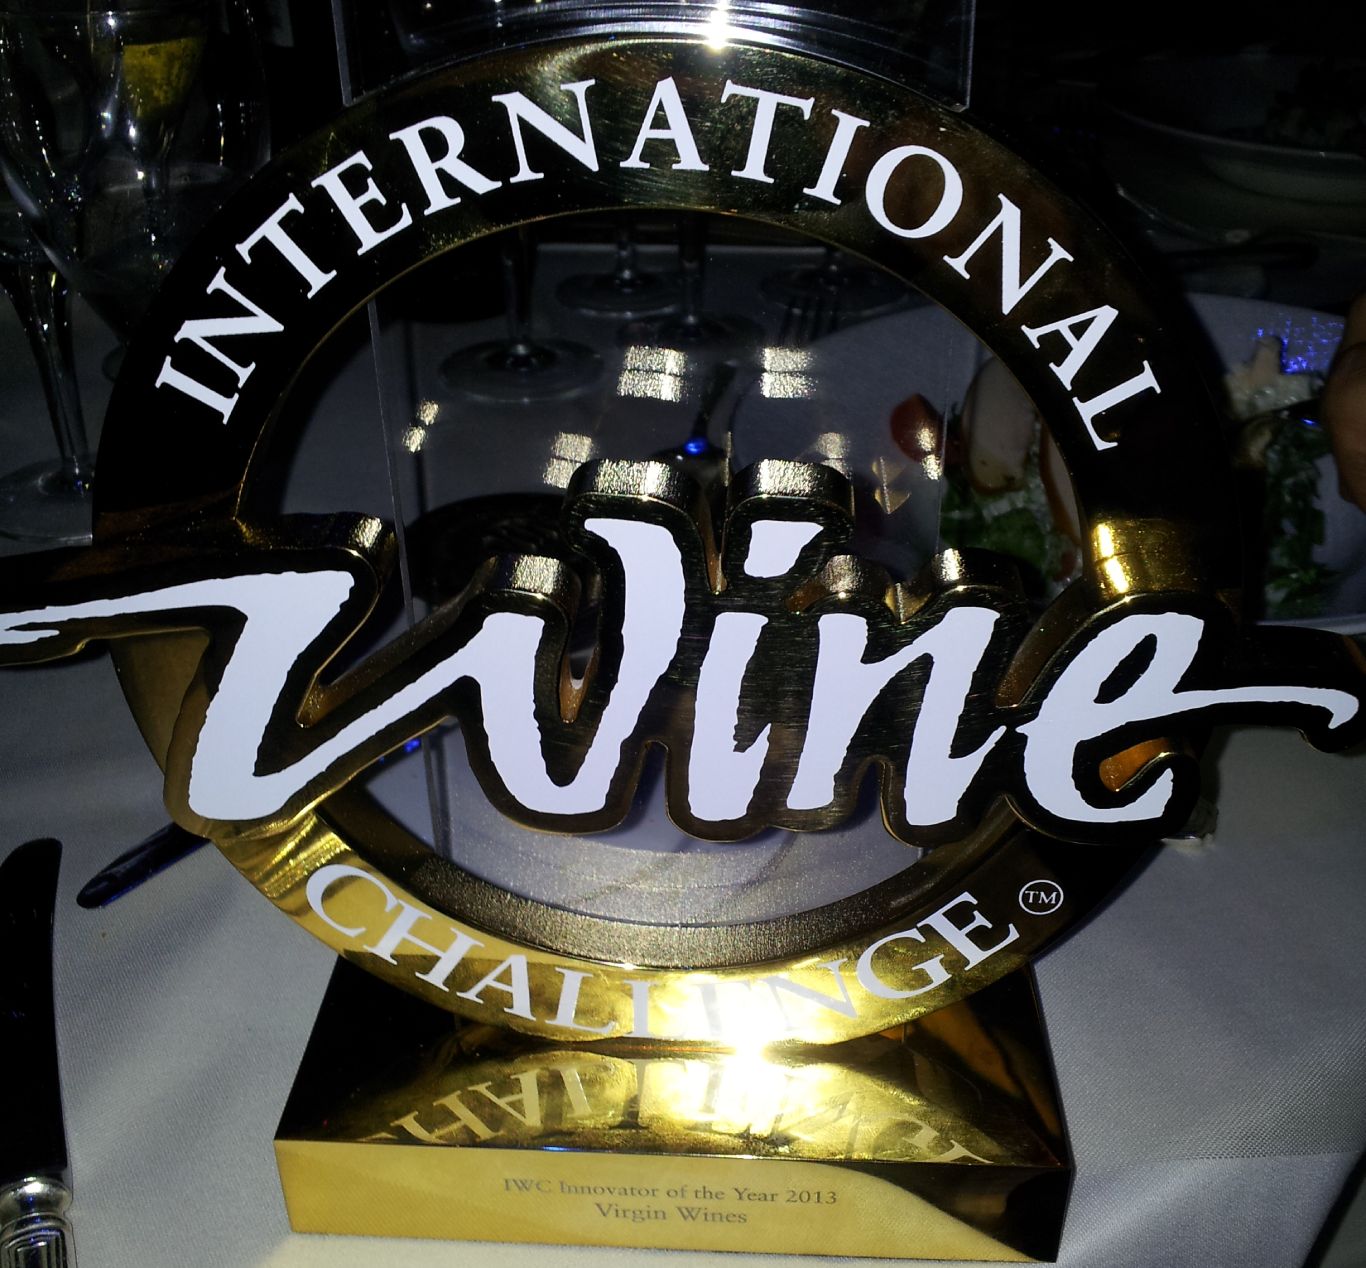 International Wine Challenge 2013 Award